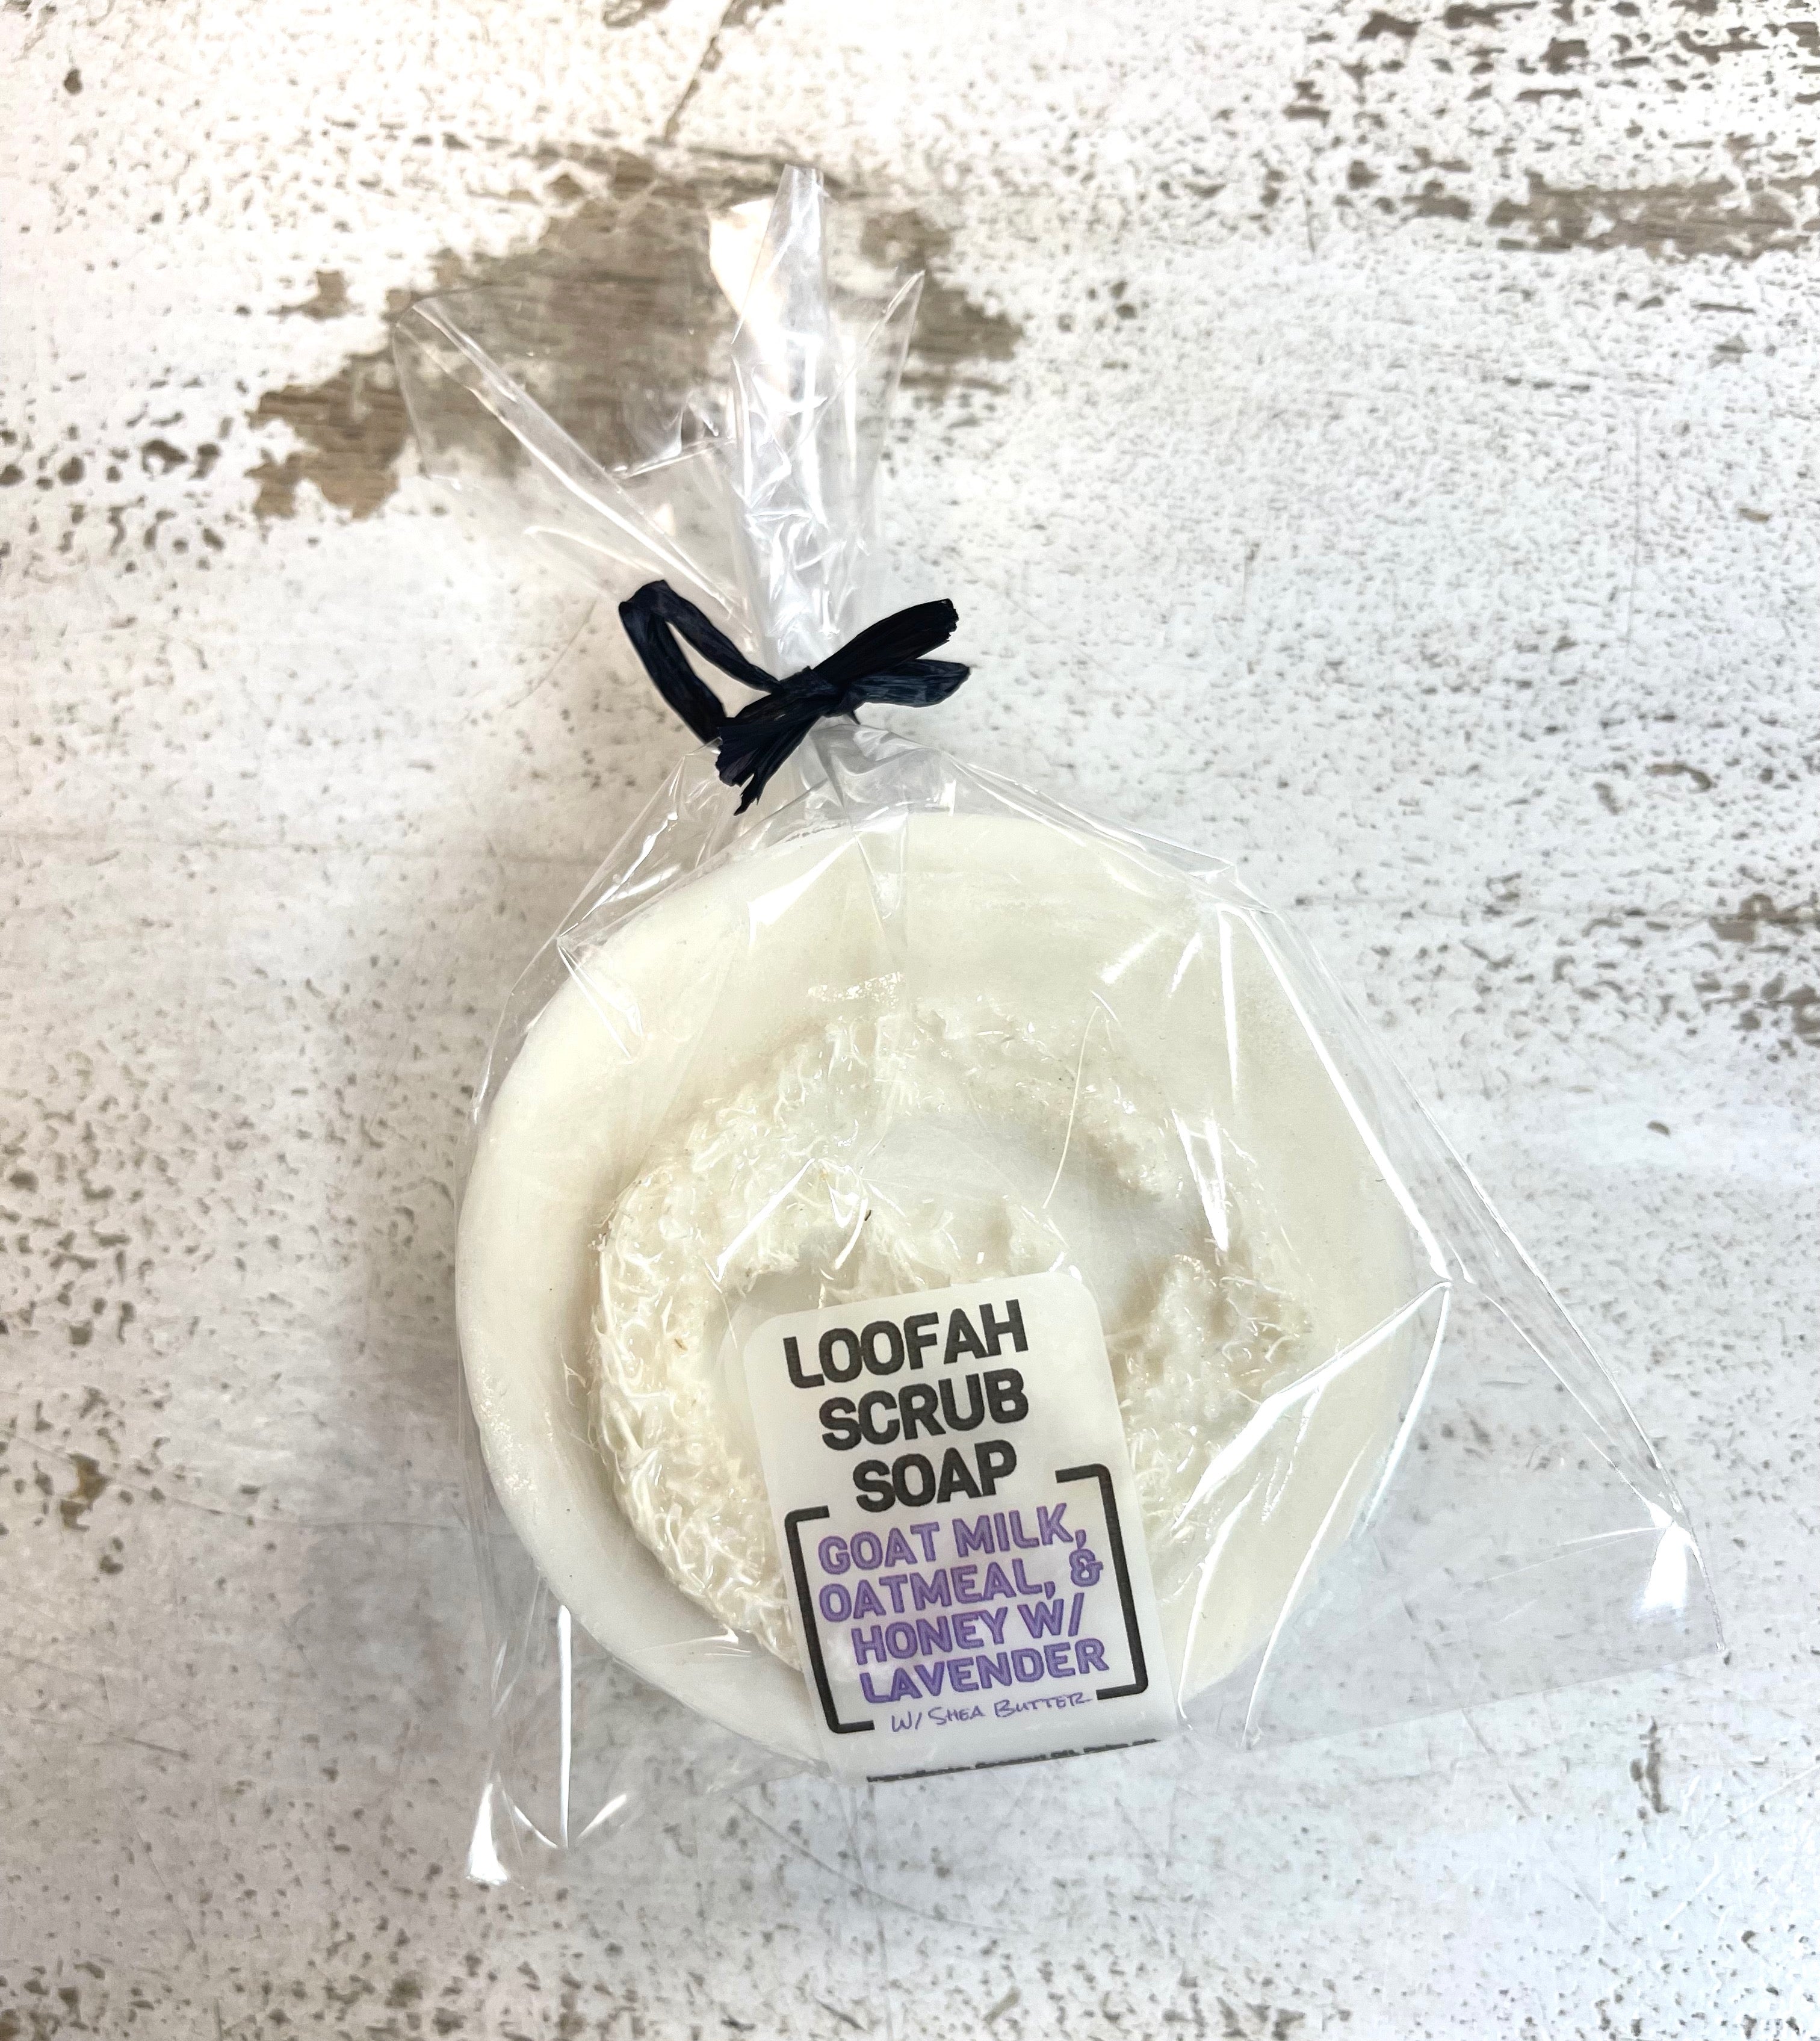 Cobalt Soap Co. Loofah Scrub Soap Goat's Milk Lavender